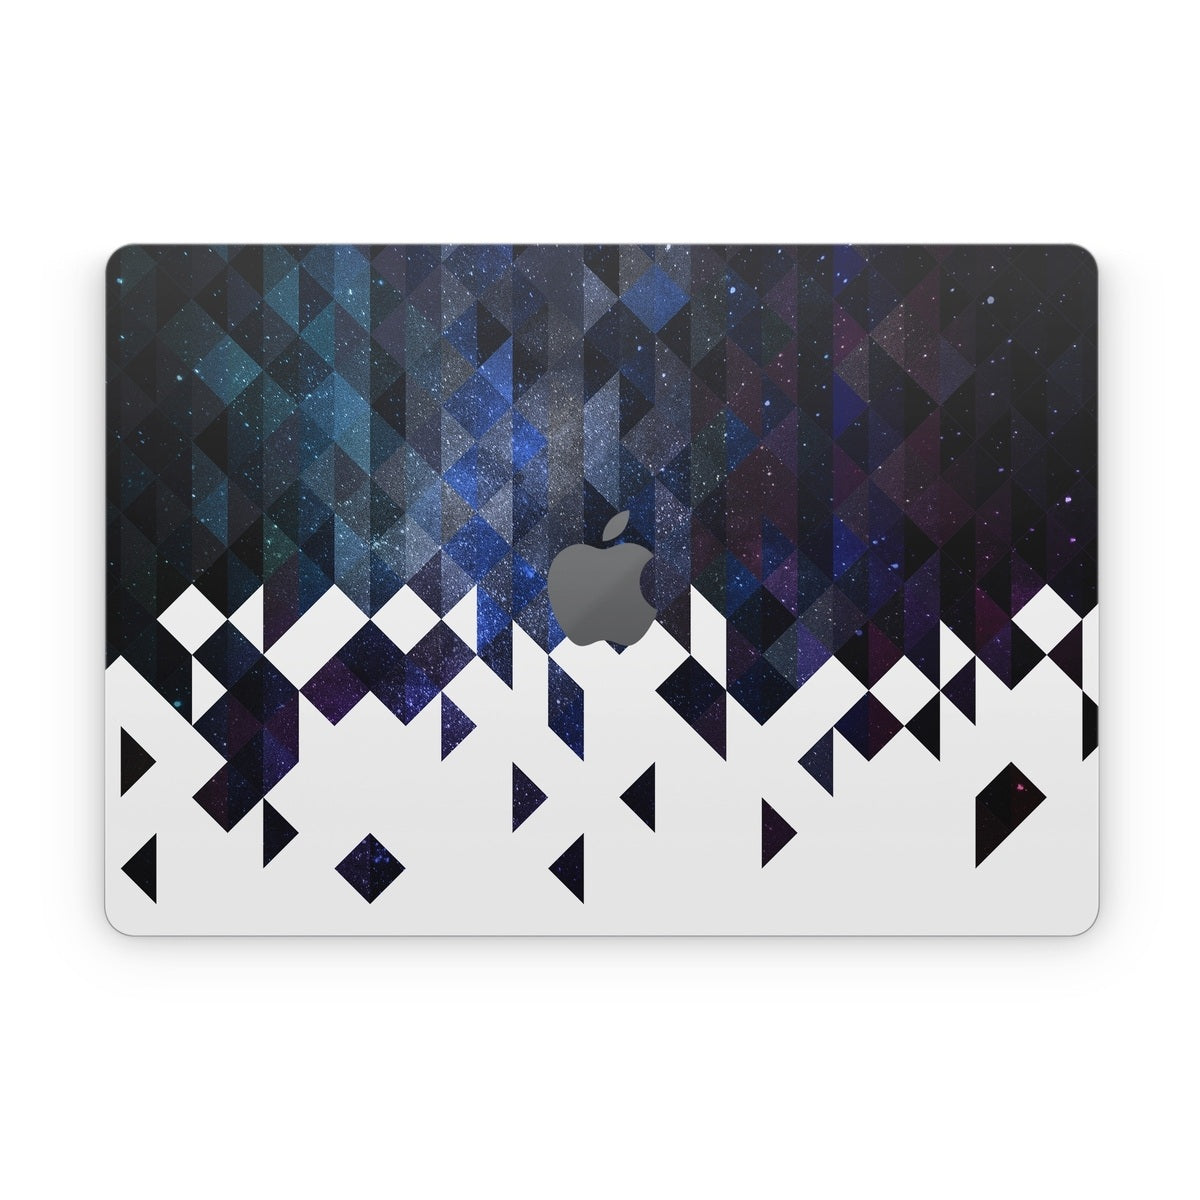 Collapse - Apple MacBook Skin